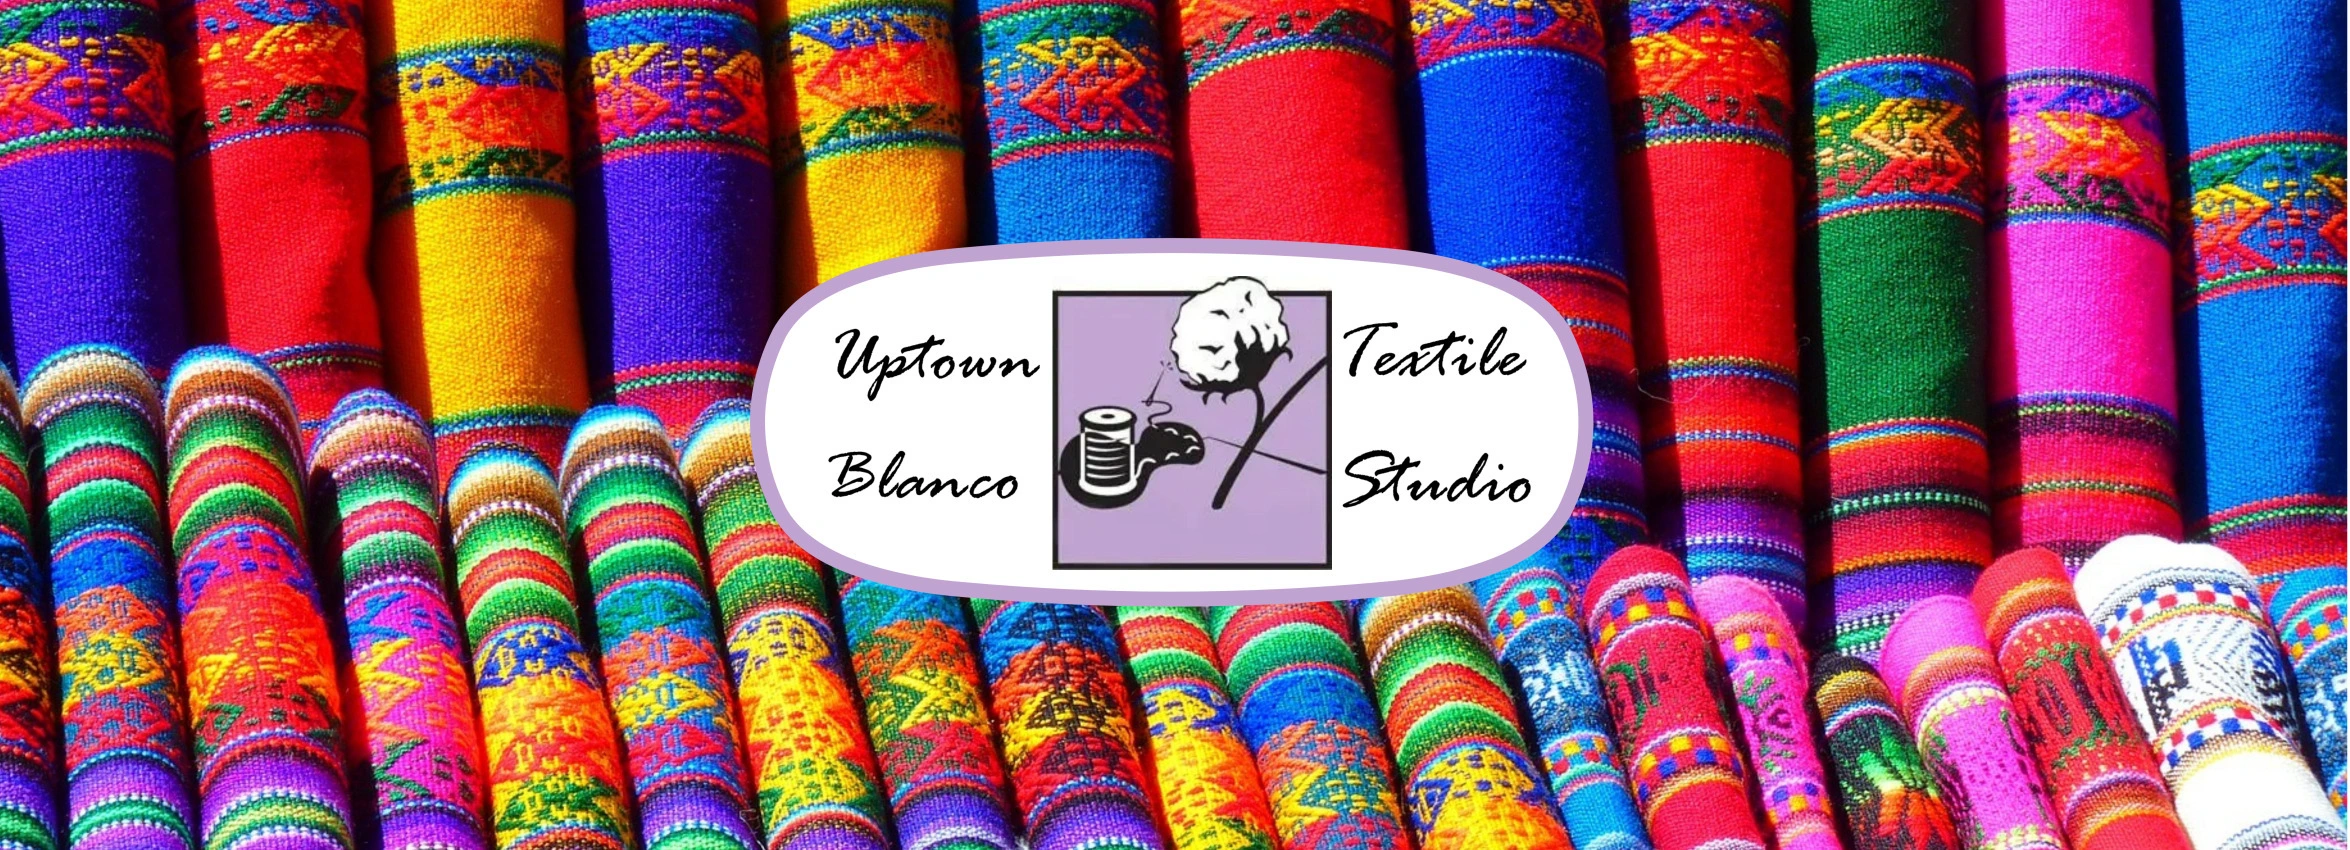 Uptown-Blanco-Textile-Studio_desktop_ET